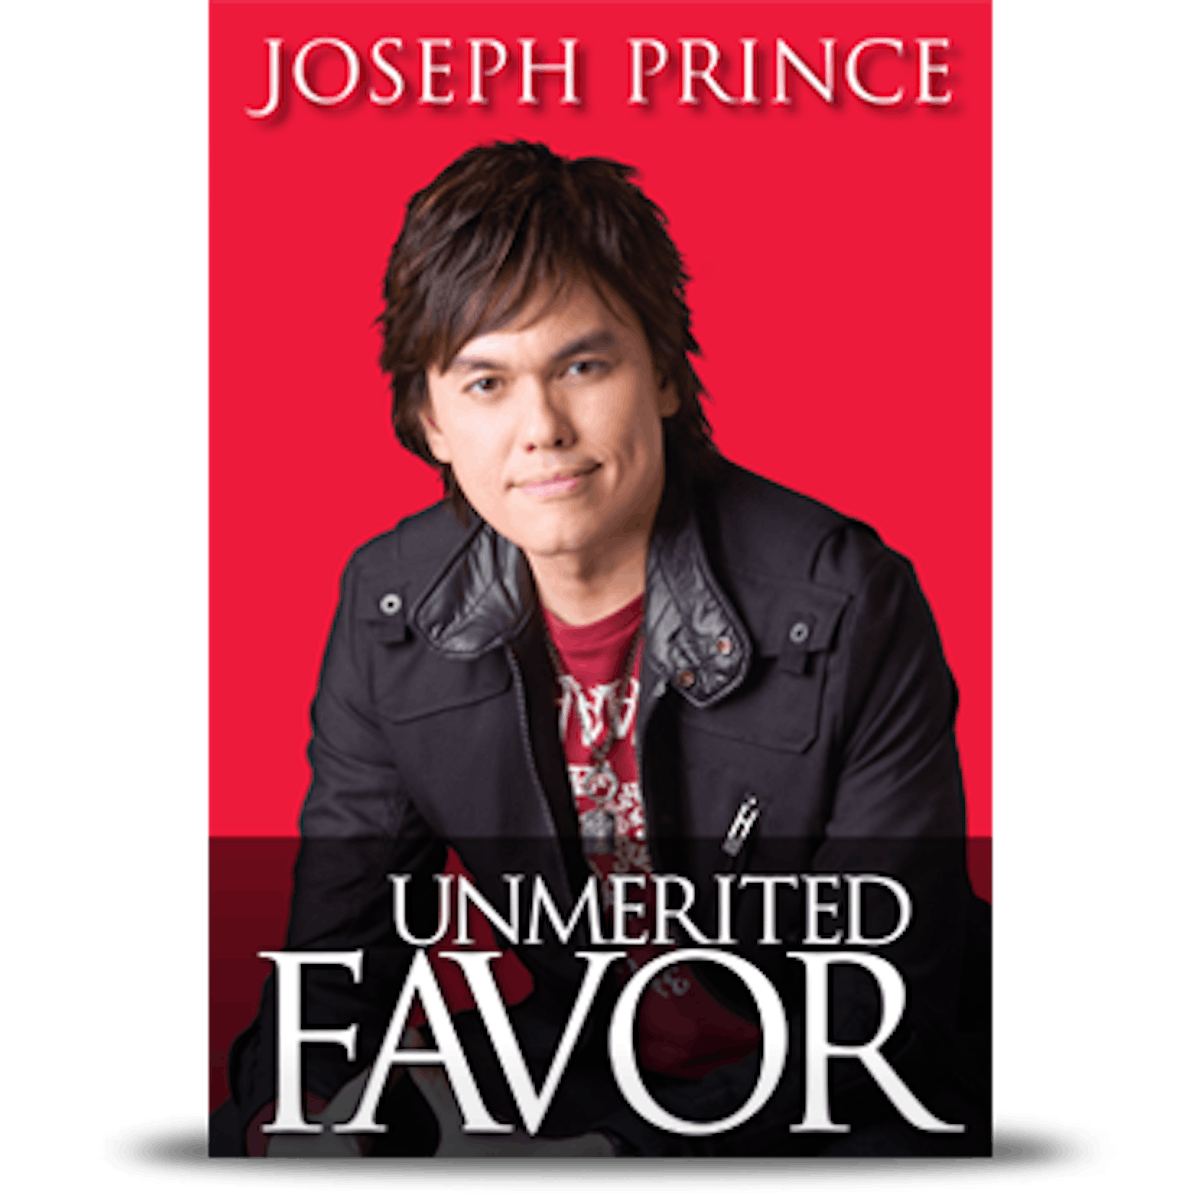 Unmerited Favor - Joseph Prince (Hardcover)